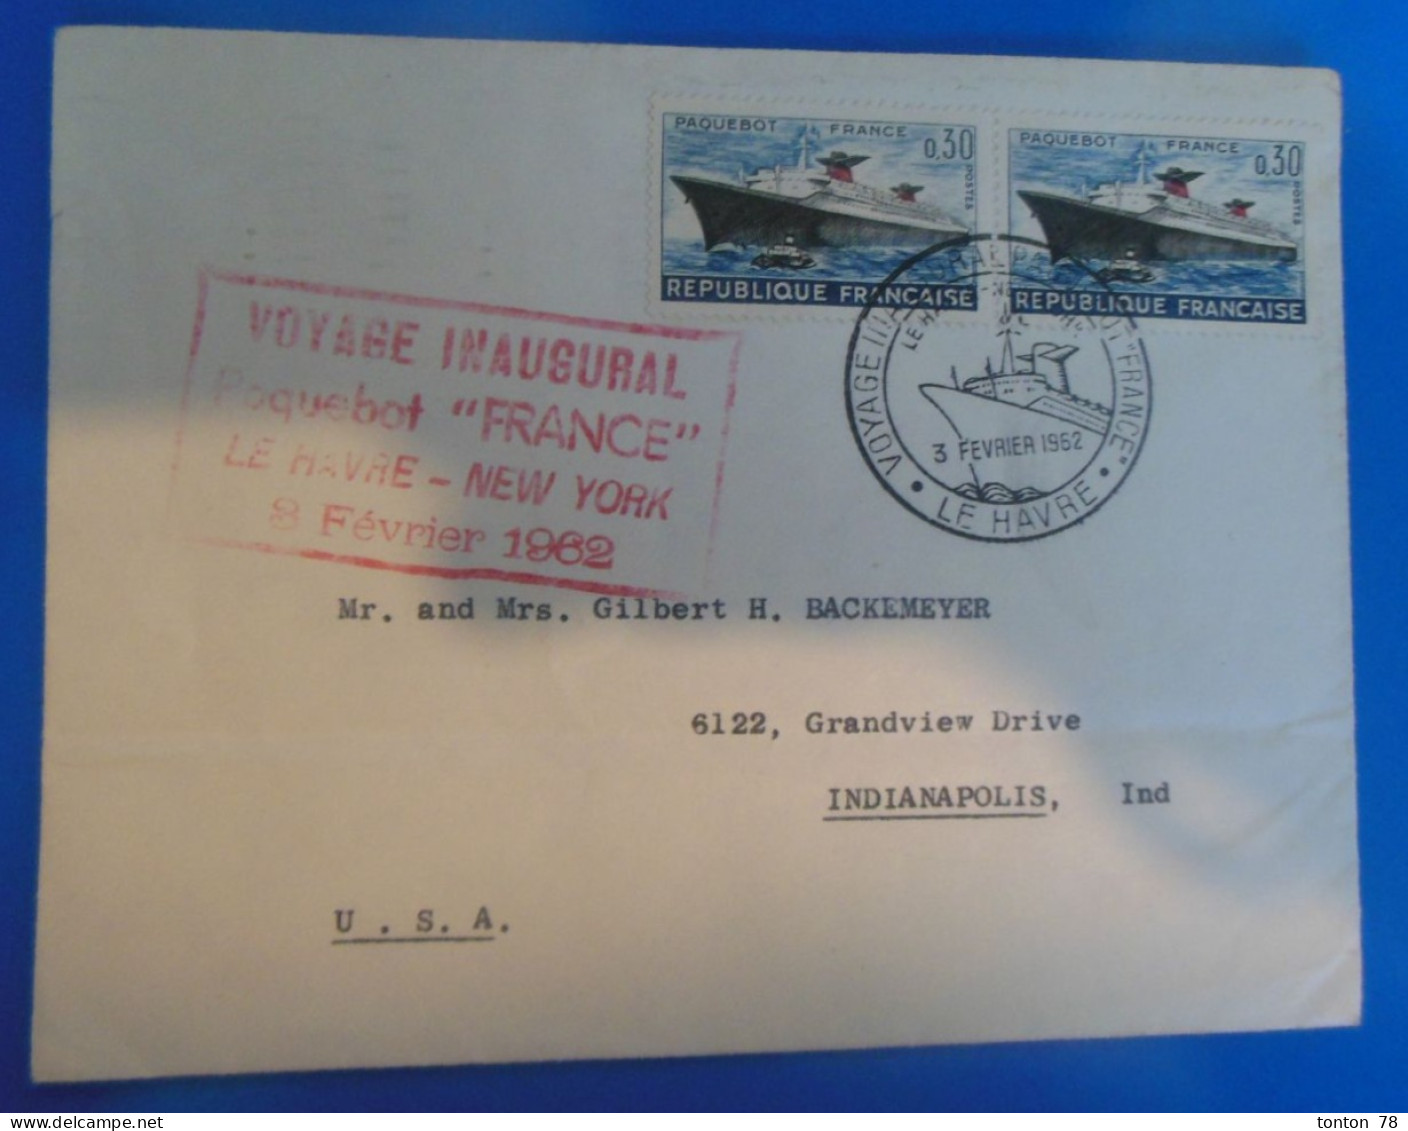 LETTRE DE FRANCE   -  VOYAGE INAUGURAL DU PAQUEBOT  "  FRANCE  "  3 FEVRIER 1962 - Covers & Documents